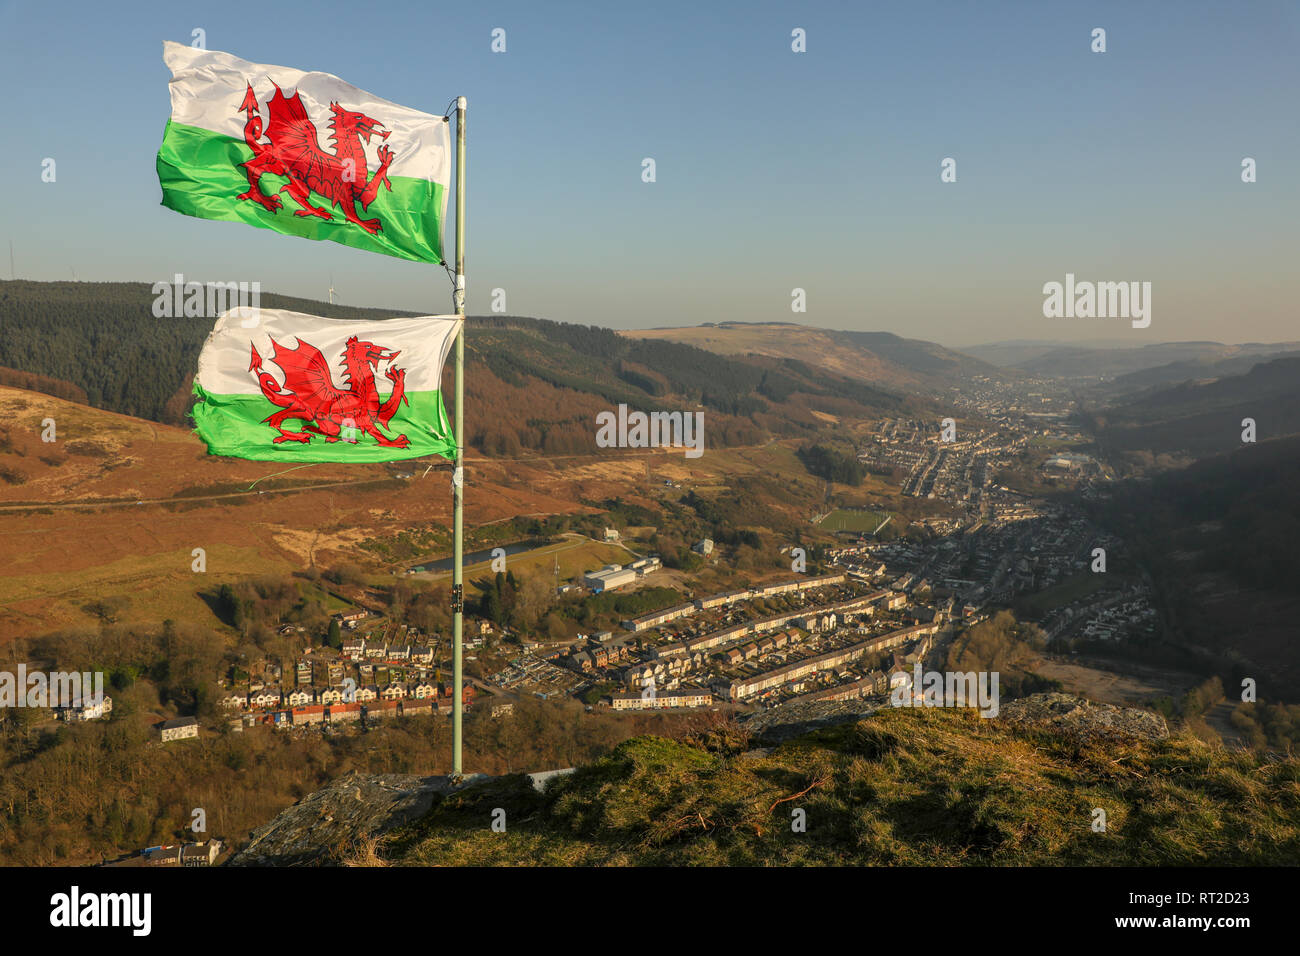 The Red Dragon, Wales Flag and national emblem, flies over the Rhondda valleys at Blaen Rhondda, South Wales Valleys, Wales, UK. Stock Photo